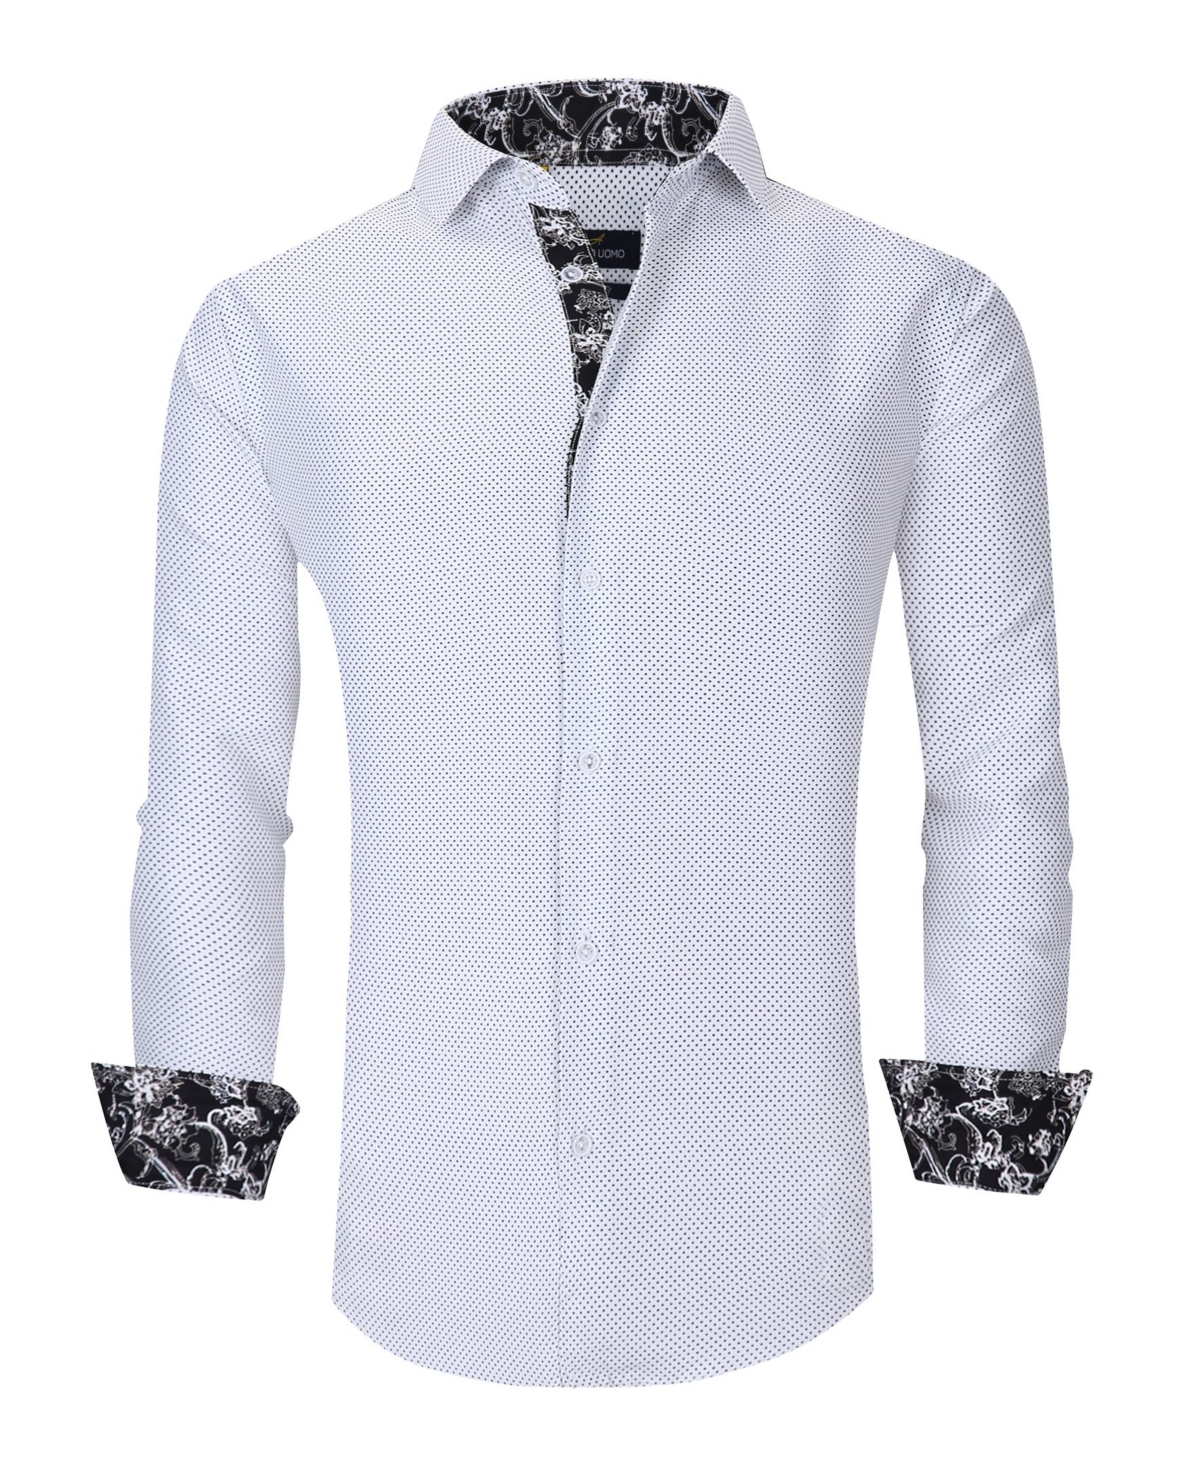 Men's Slim Fit Business Nautical Button Down Dress Shirt - White Polka Dots